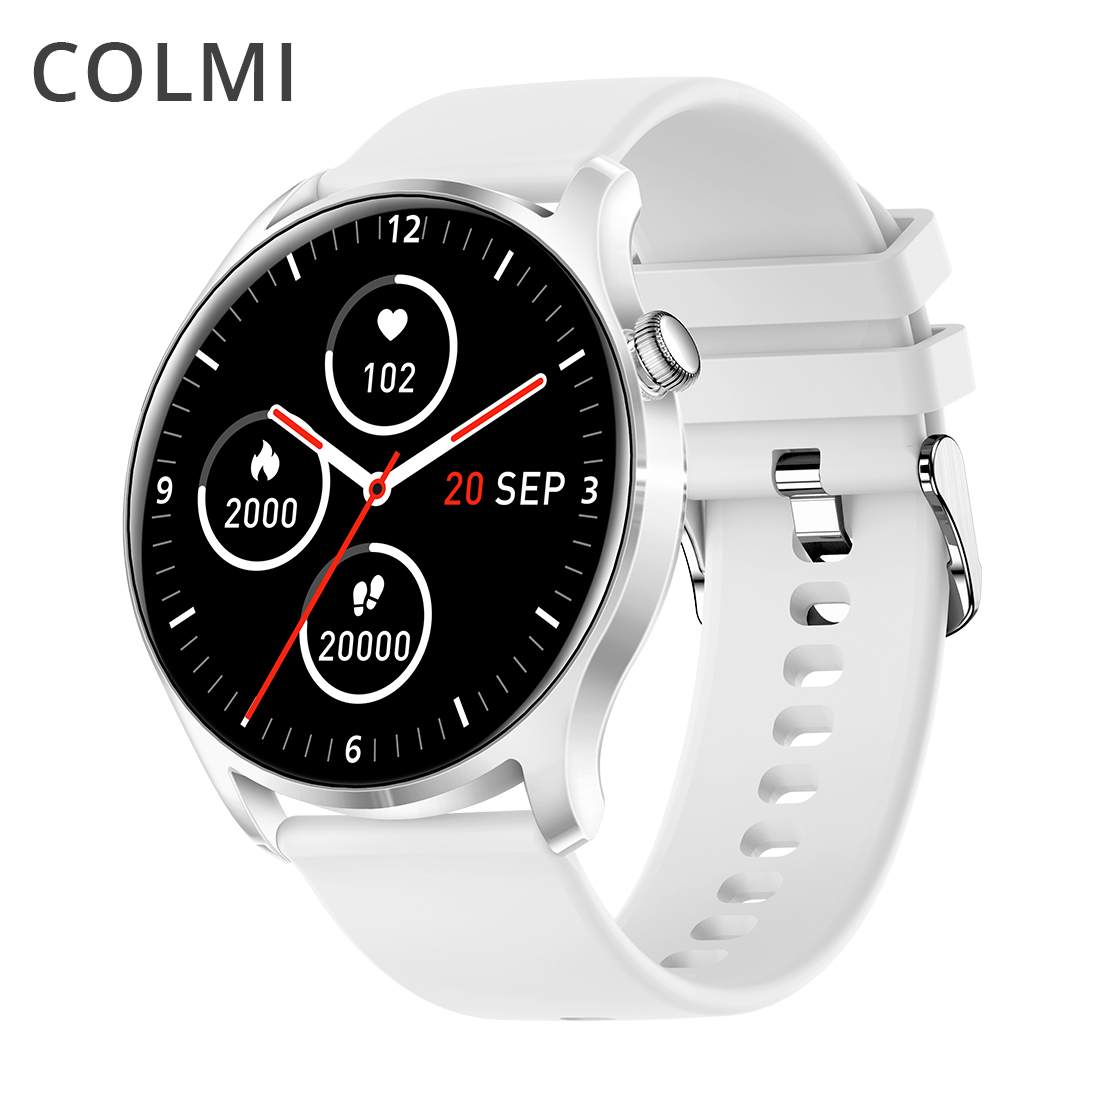 COLMI SKY 8 Smart Watch Women IP67 Bluetooth Smartwatch Men anaghị egbochi mmiri maka gam akporo i (7)